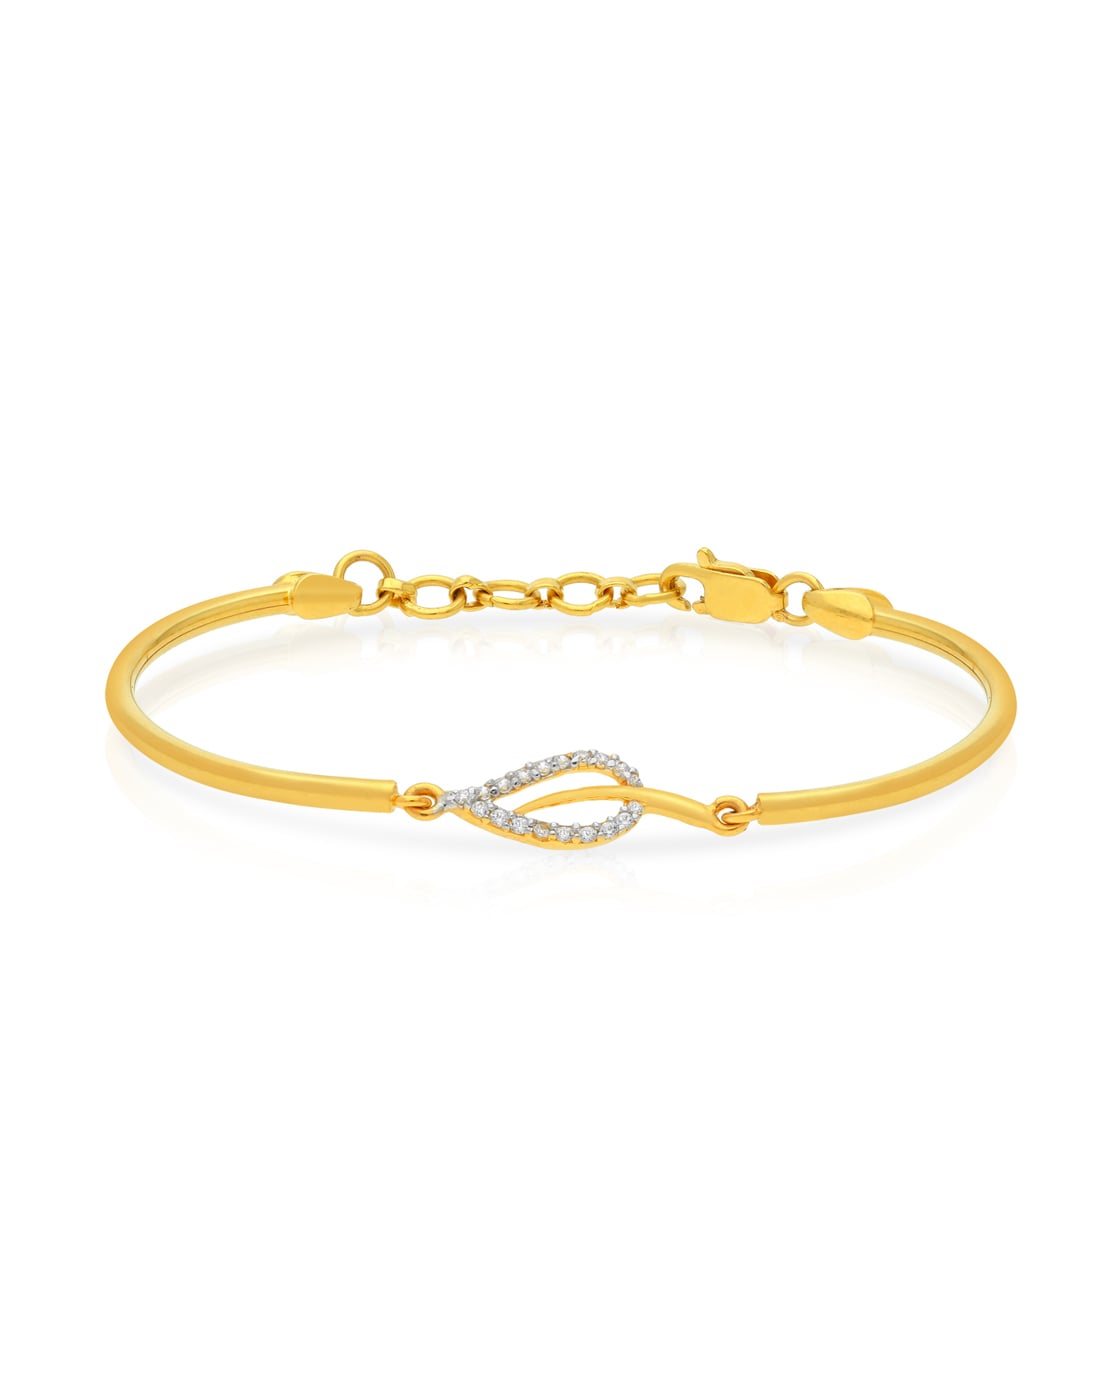 Herringbone Chain Bracelet in 18k Yellow Gold Vermeil | Kendra Scott